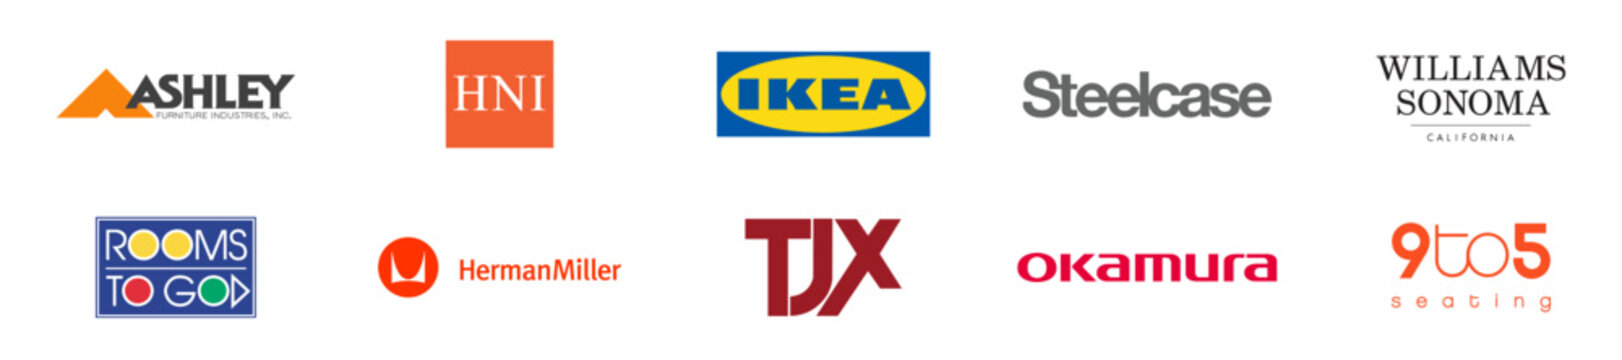 Top 10 furniture brands in the world. Set of logos. Ashley, HNI, ikea, Steelcase, Williams Sonoma. VINNITSA, UKRAINE - DECEMBER 17, 2022